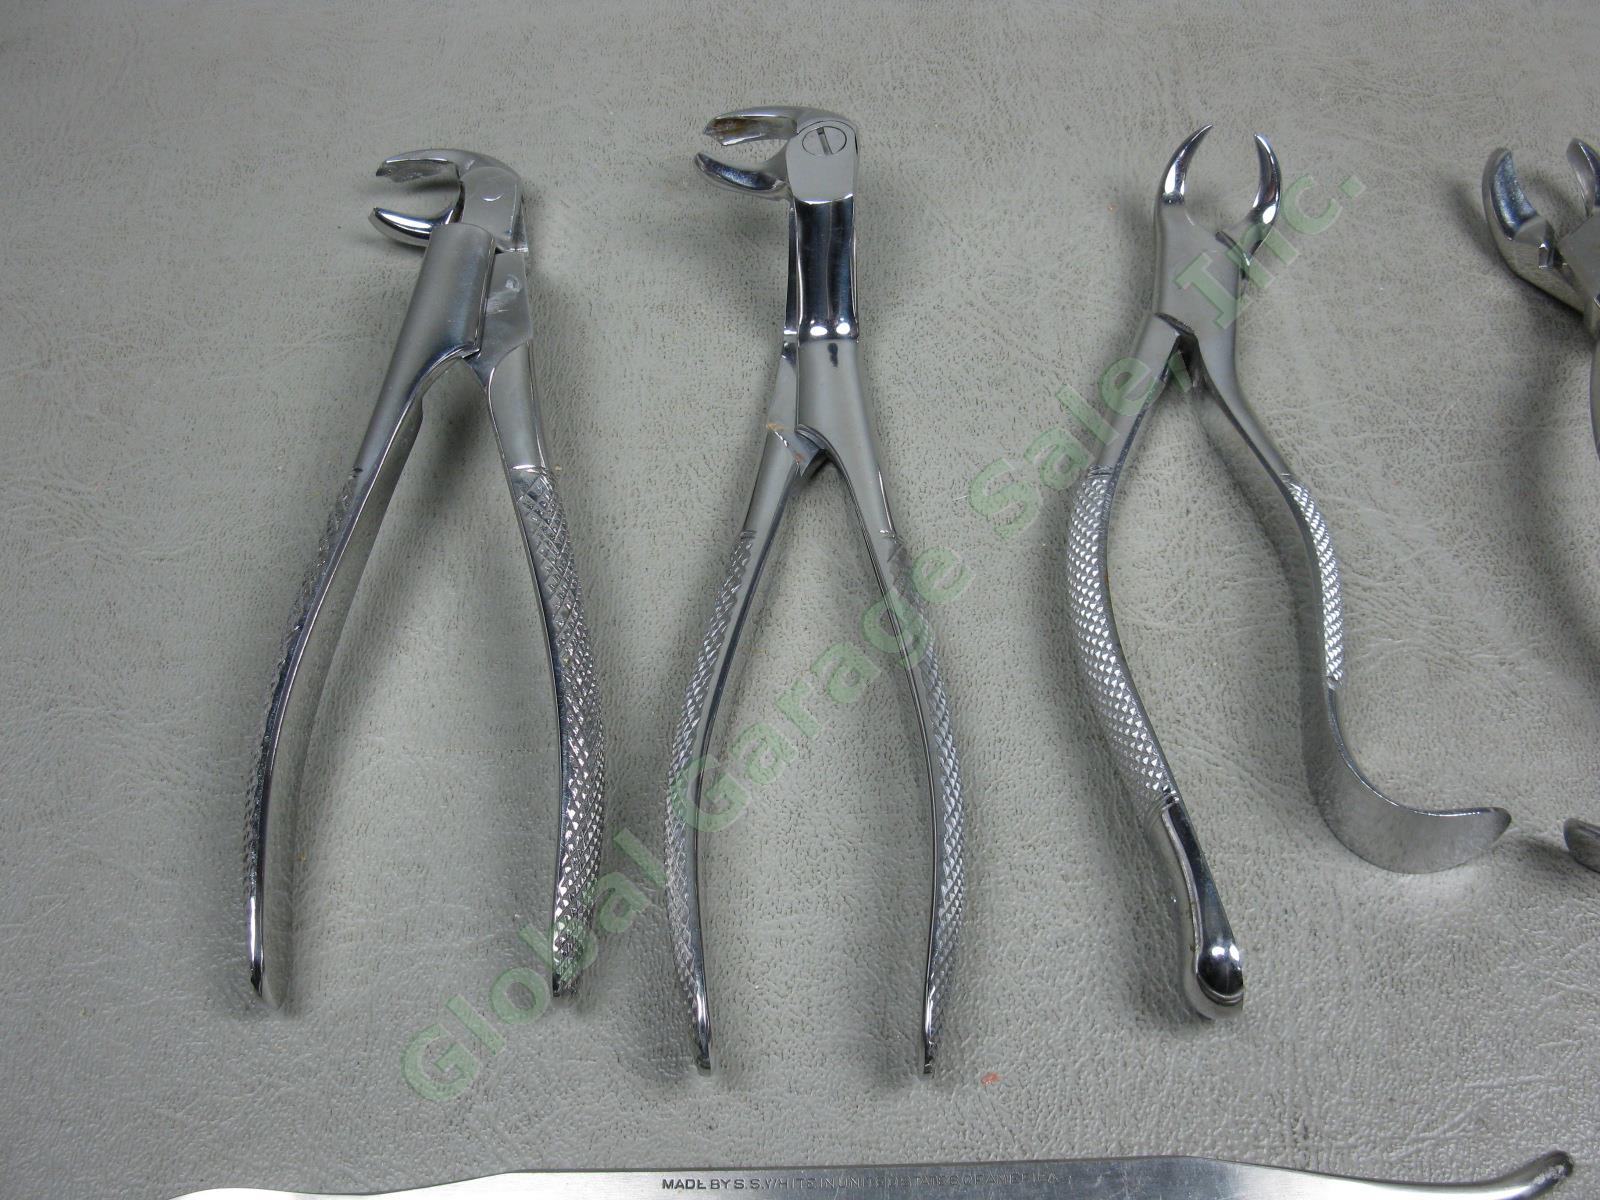 9 Dental Oral Surgery Hand Instrument Lot Forceps Scissors Hu-Friedy Clev-Dent + 1